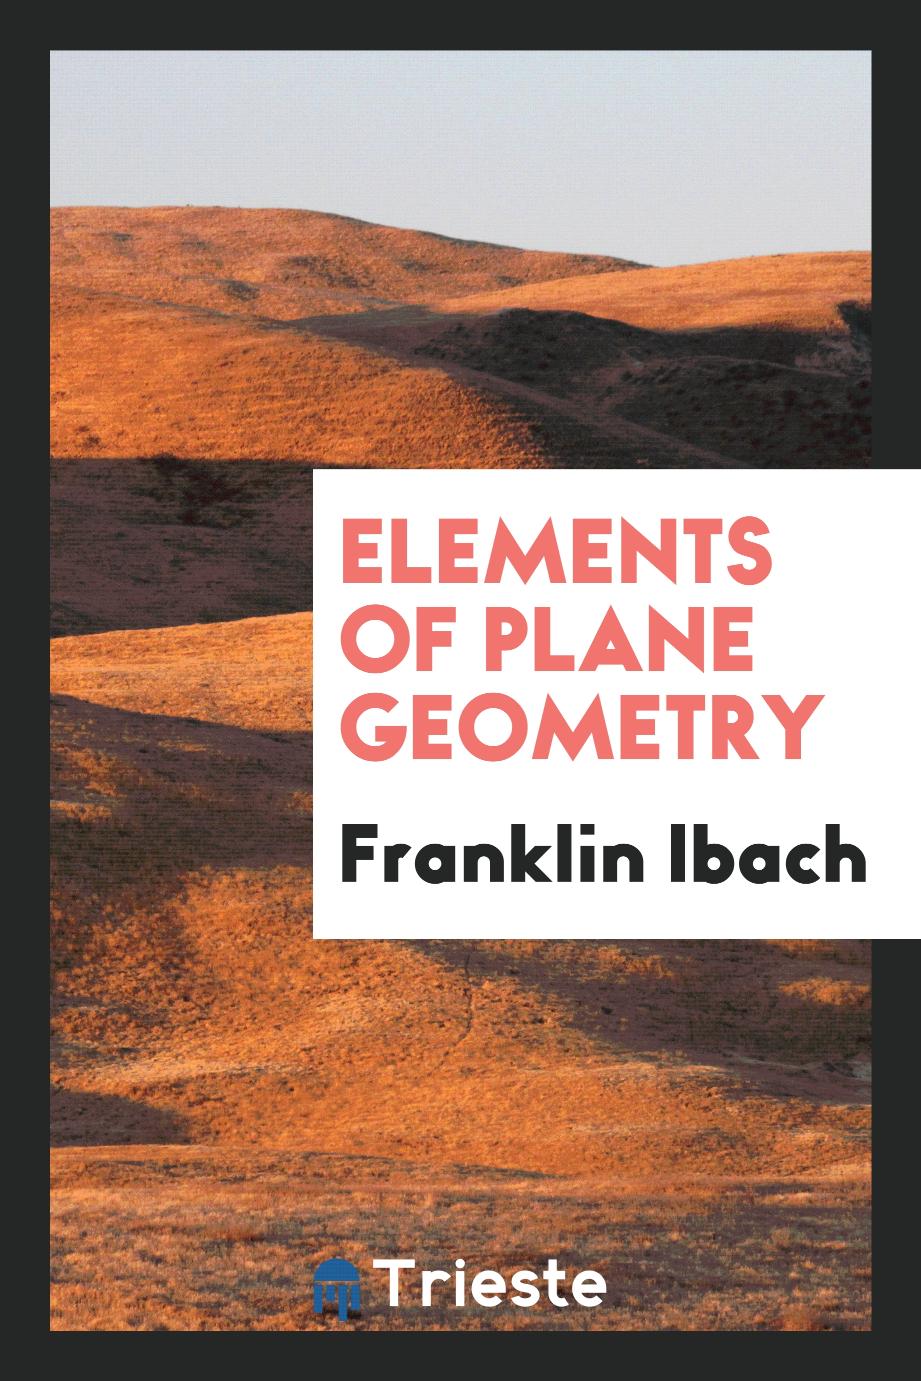 Elements of plane geometry